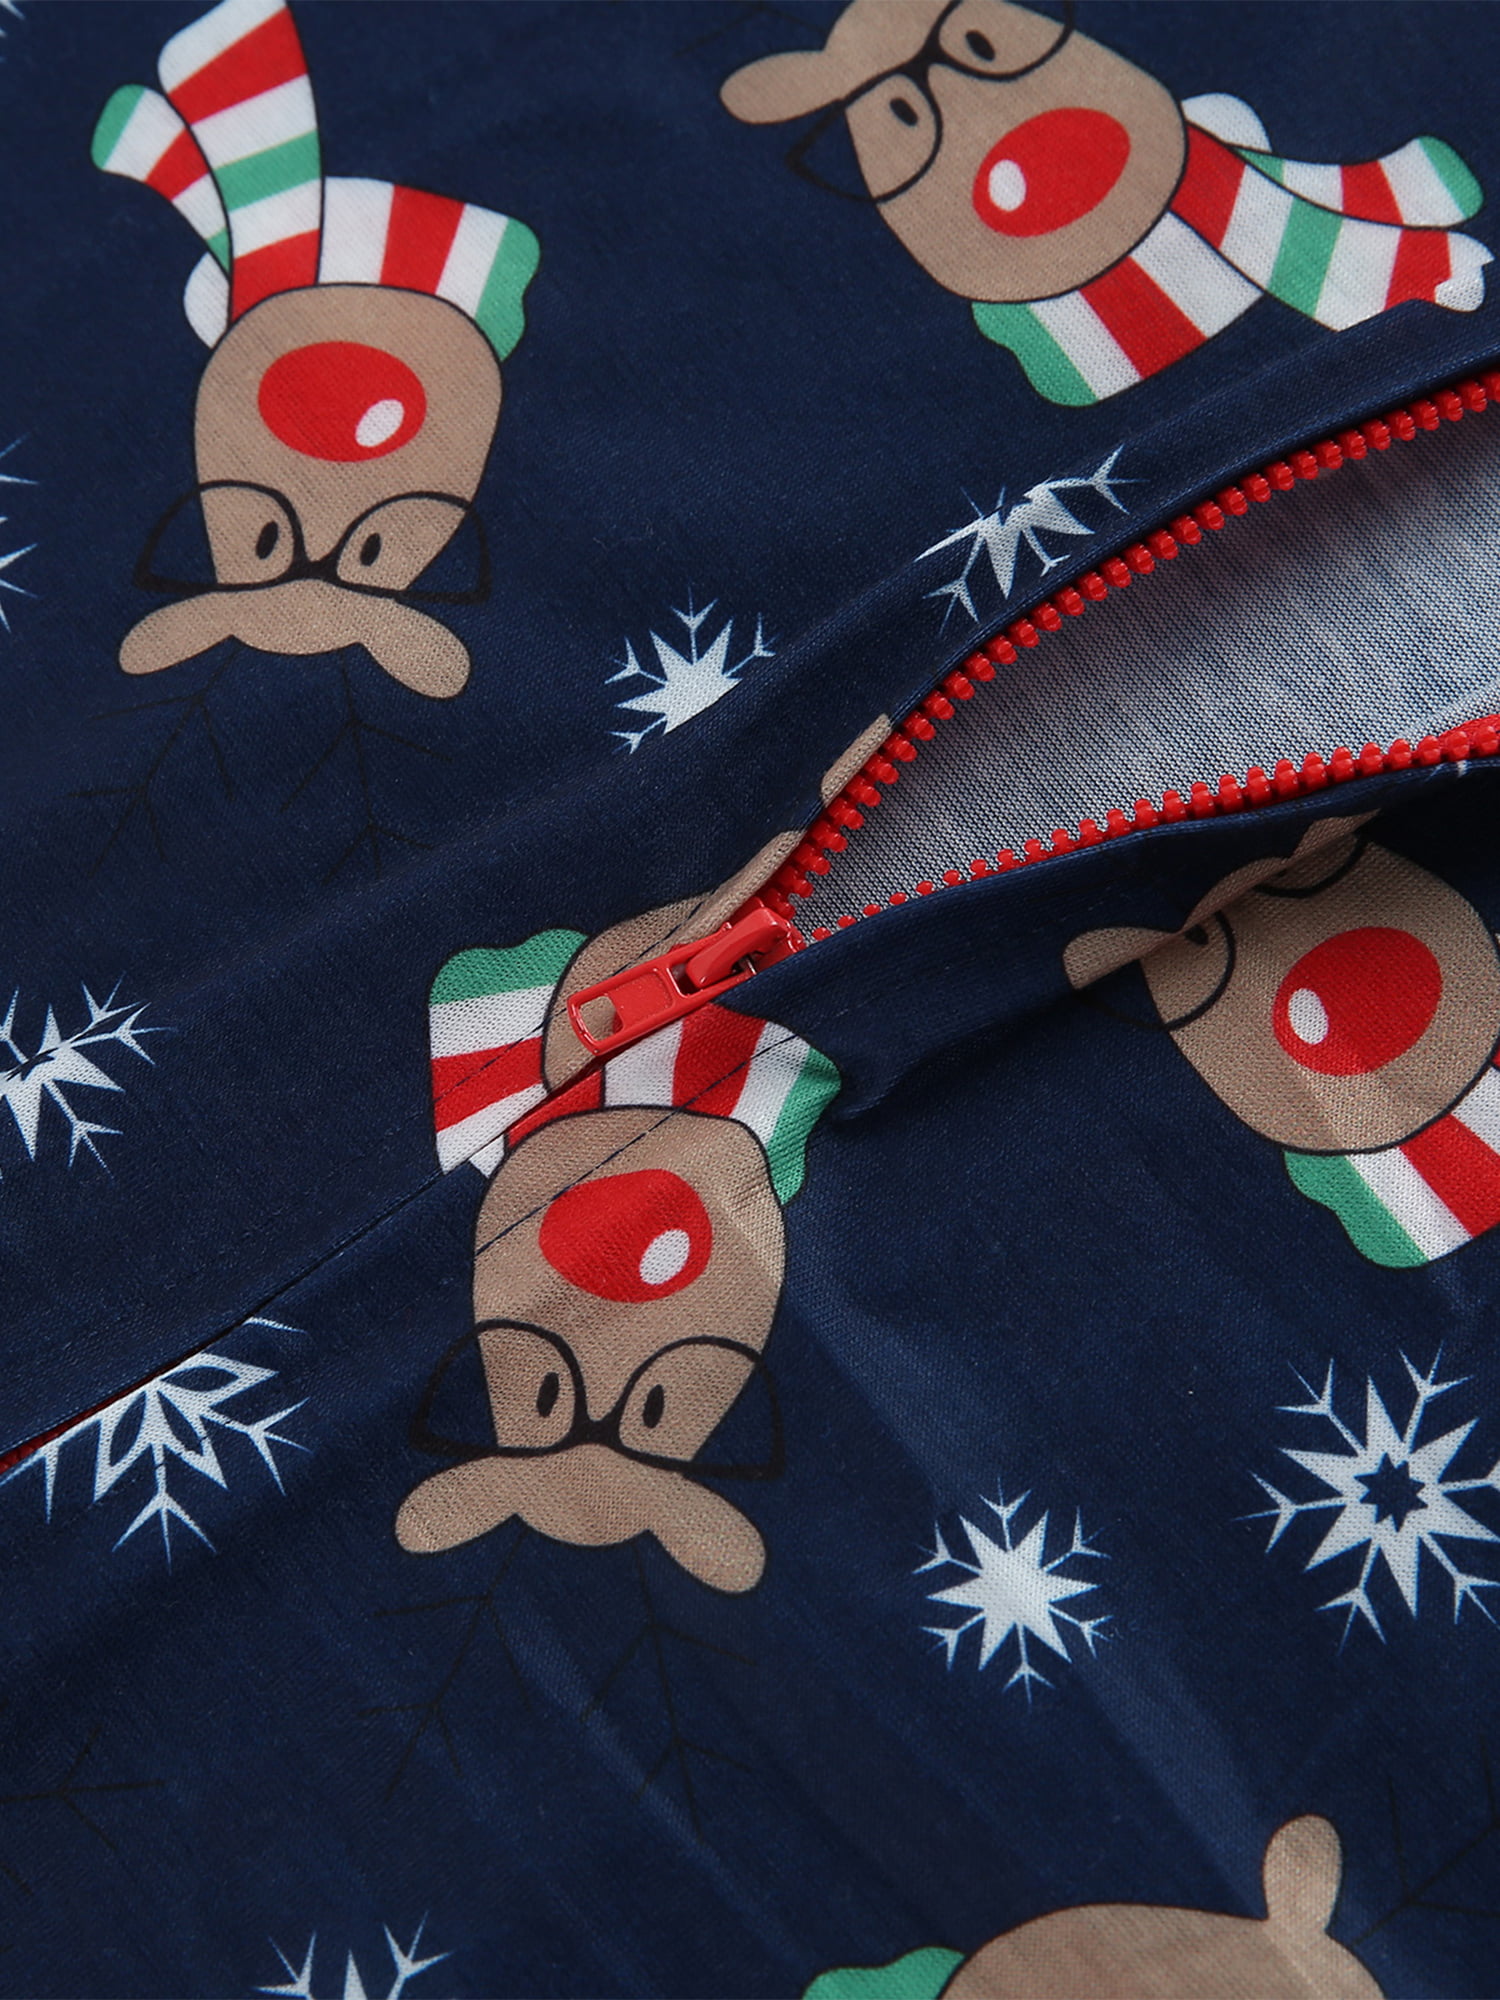 Shuttle tree Family Christmas Matching Pajamas Cartoon Deer Hooded Onesies Xmas One-Pieces Sleepwear Adult Kids Baby - image 5 of 7